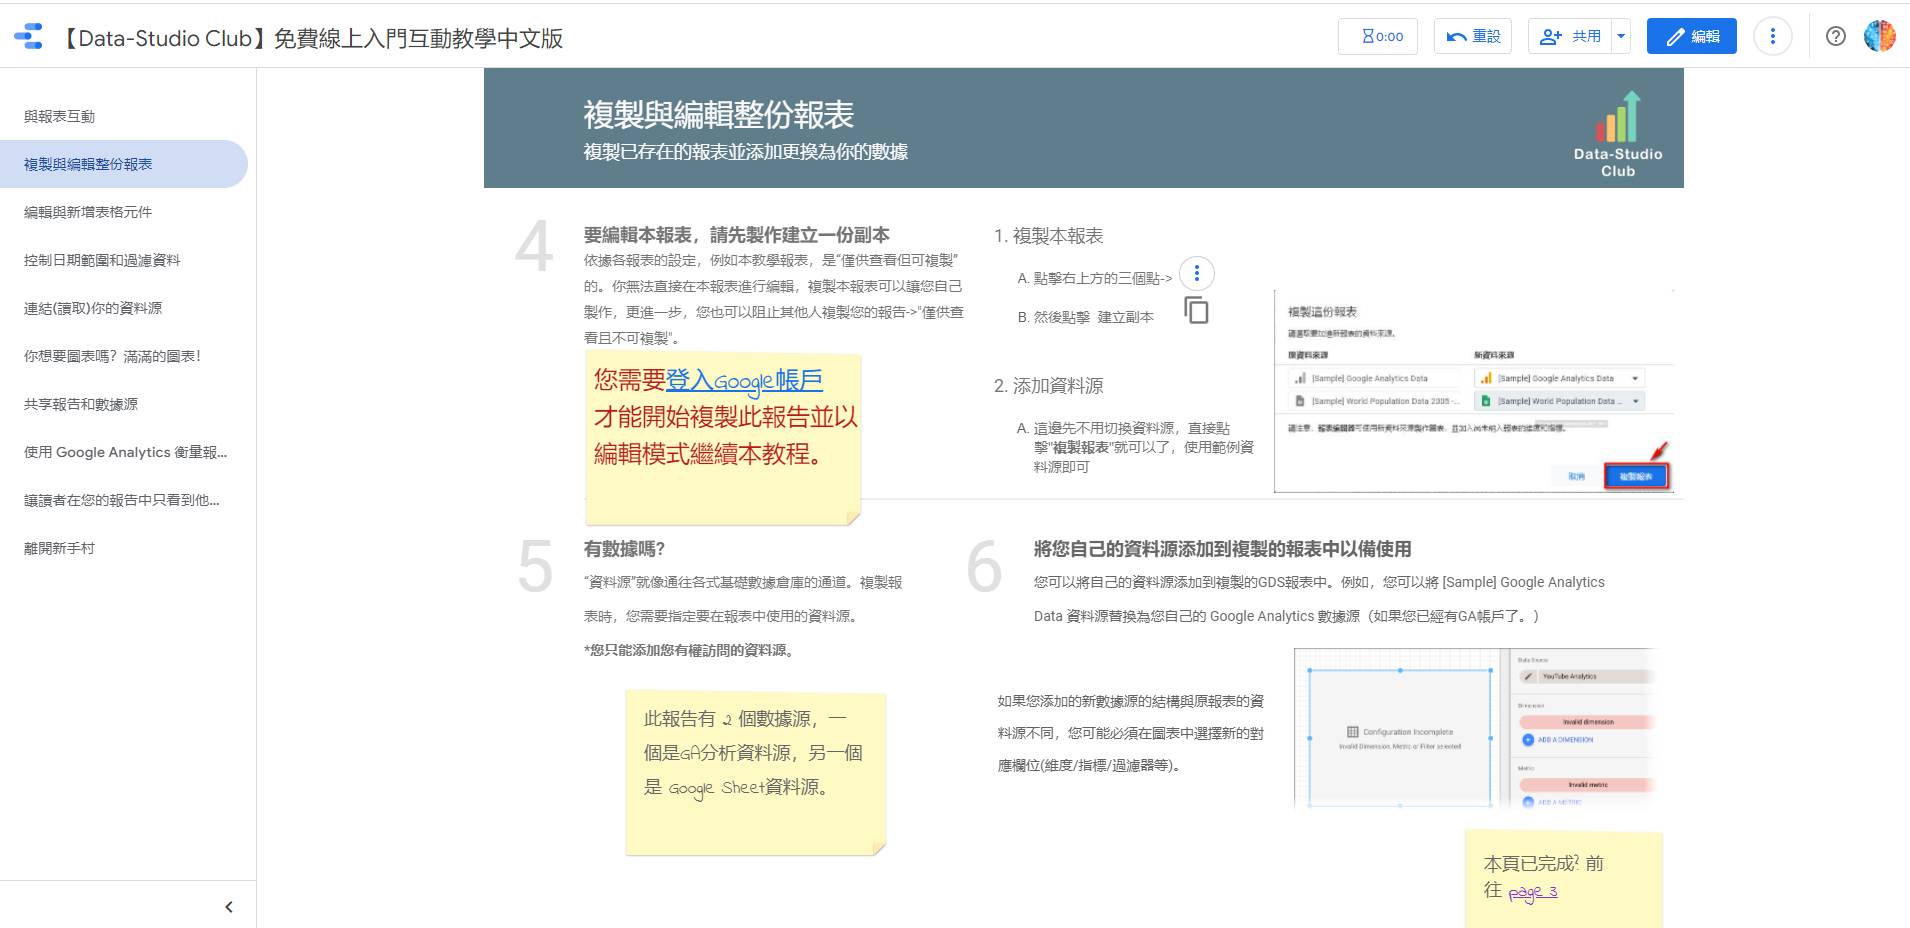 Google Data Studio online course chinese version-2